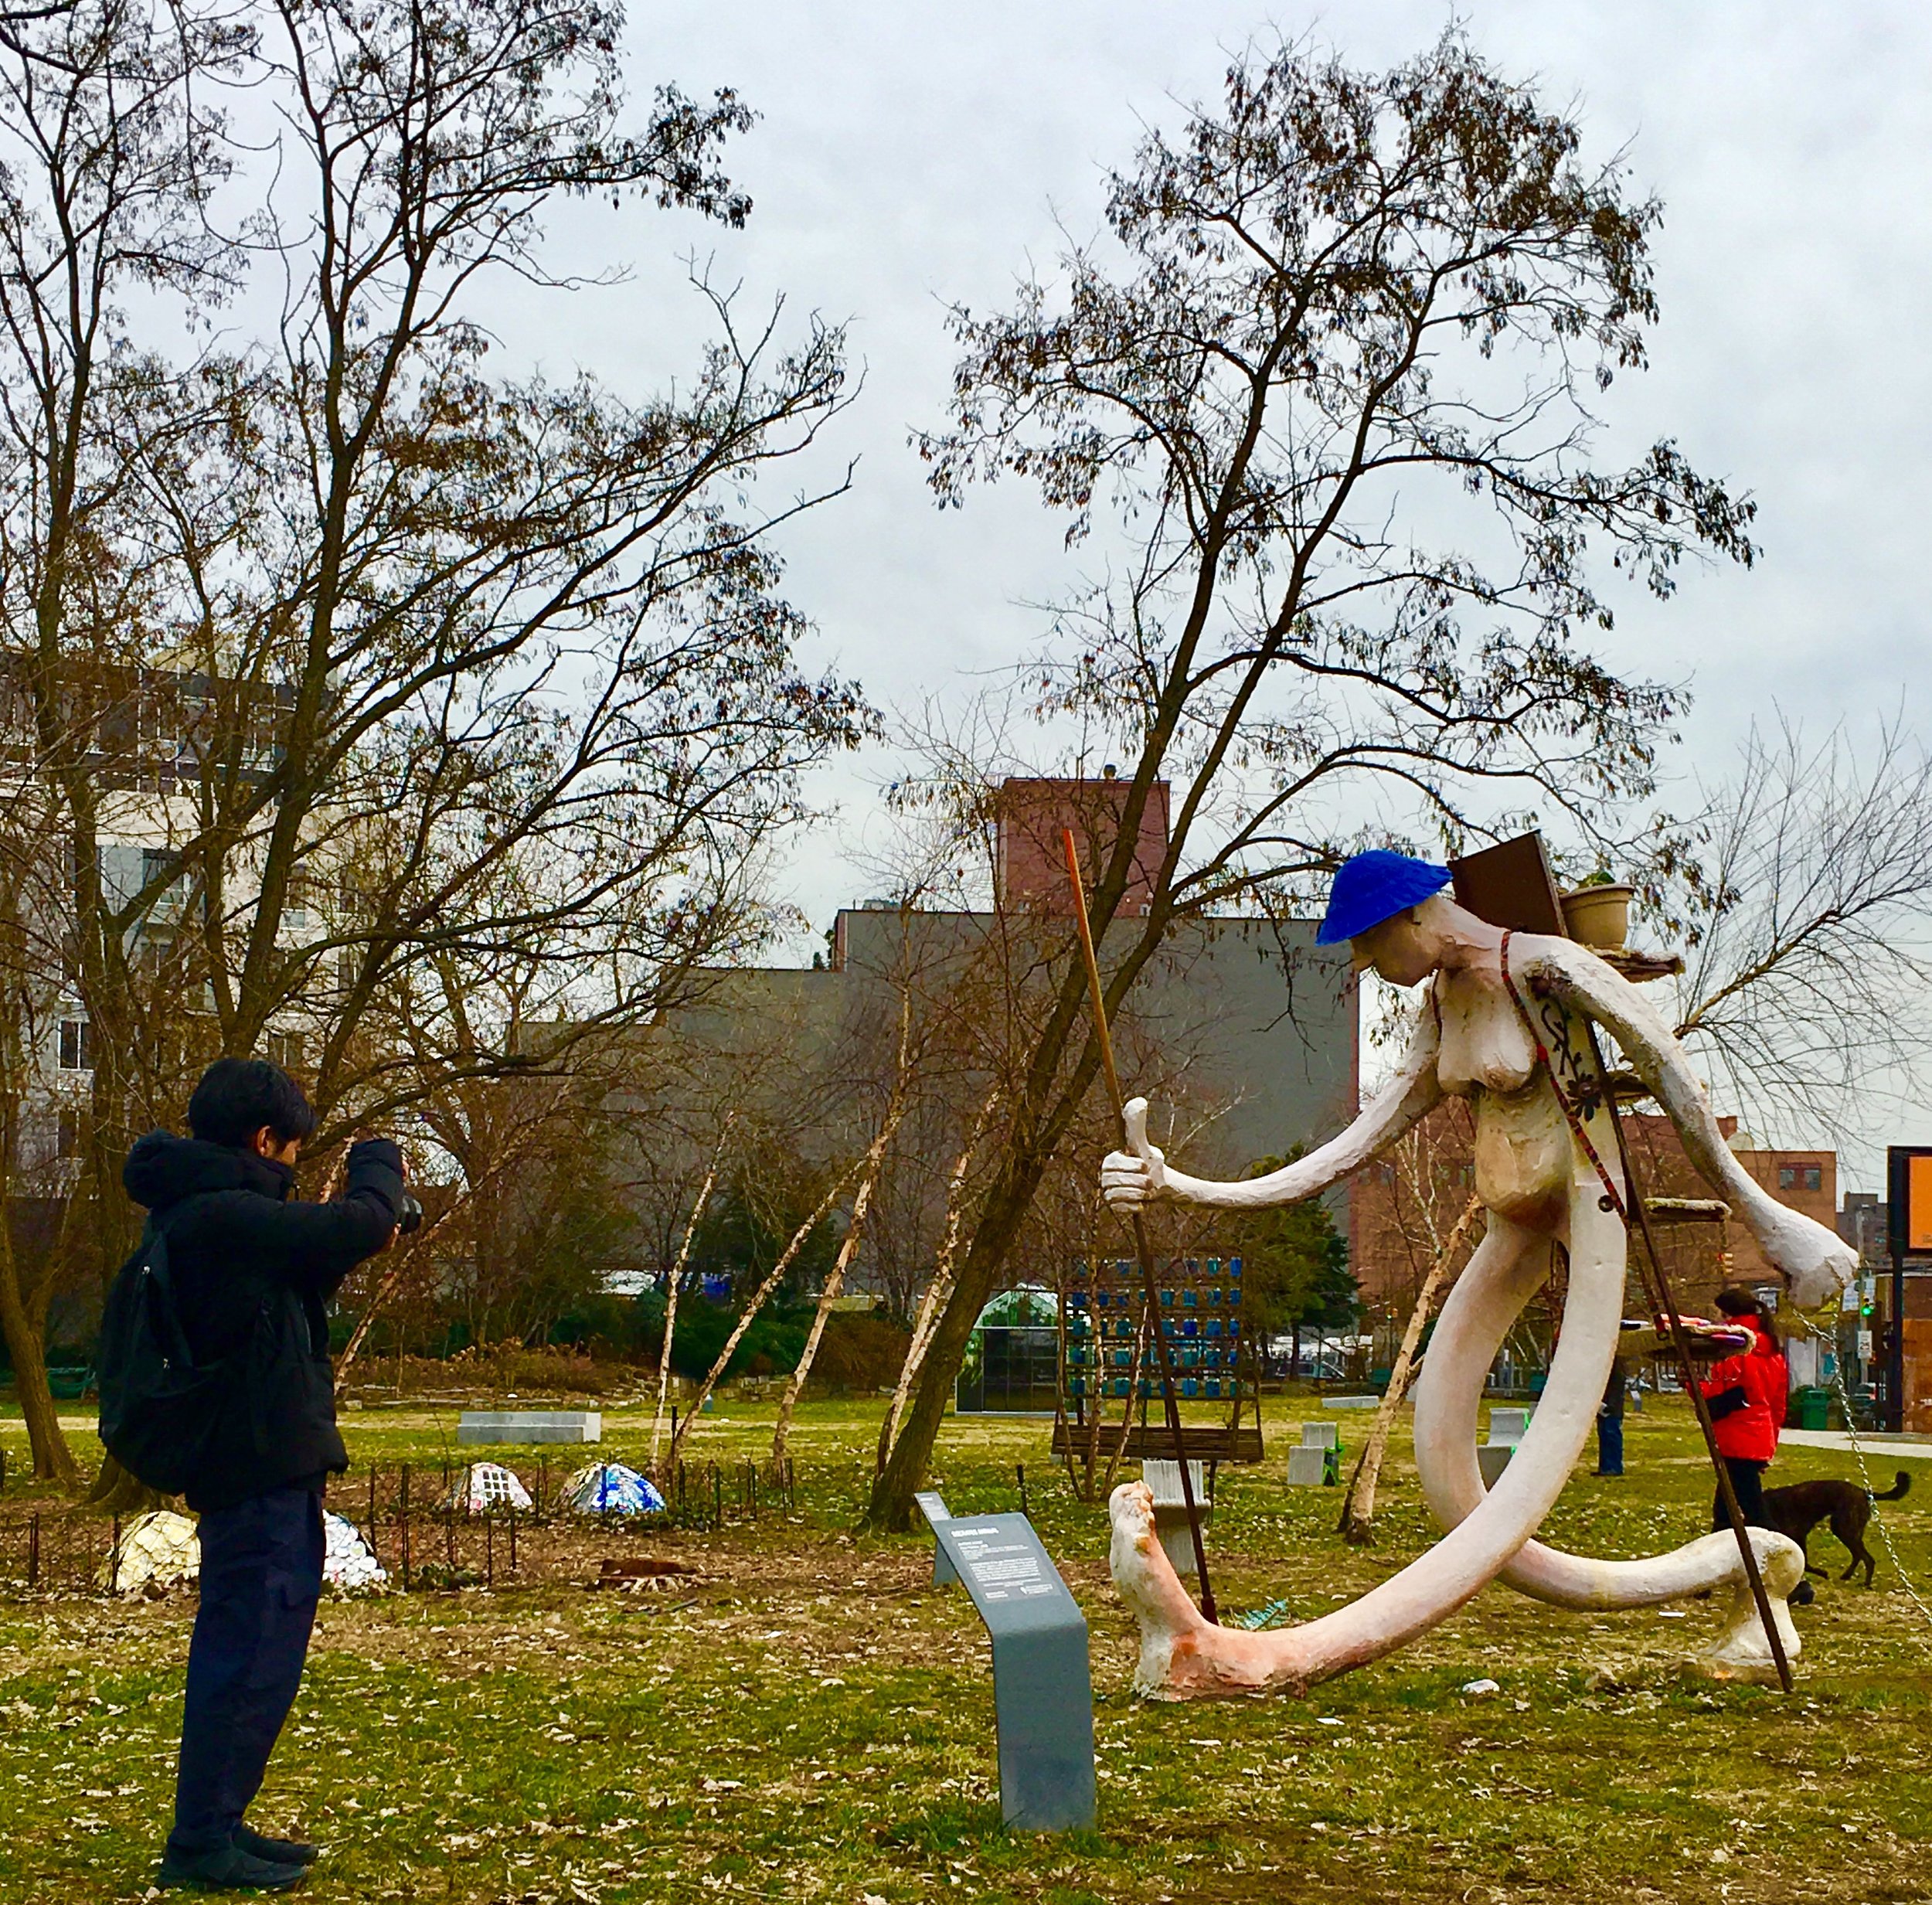  Socrates Sculpture Park visitors get a close look at “Free Peddler” by Brooklyn-based artist Antone Konst.  